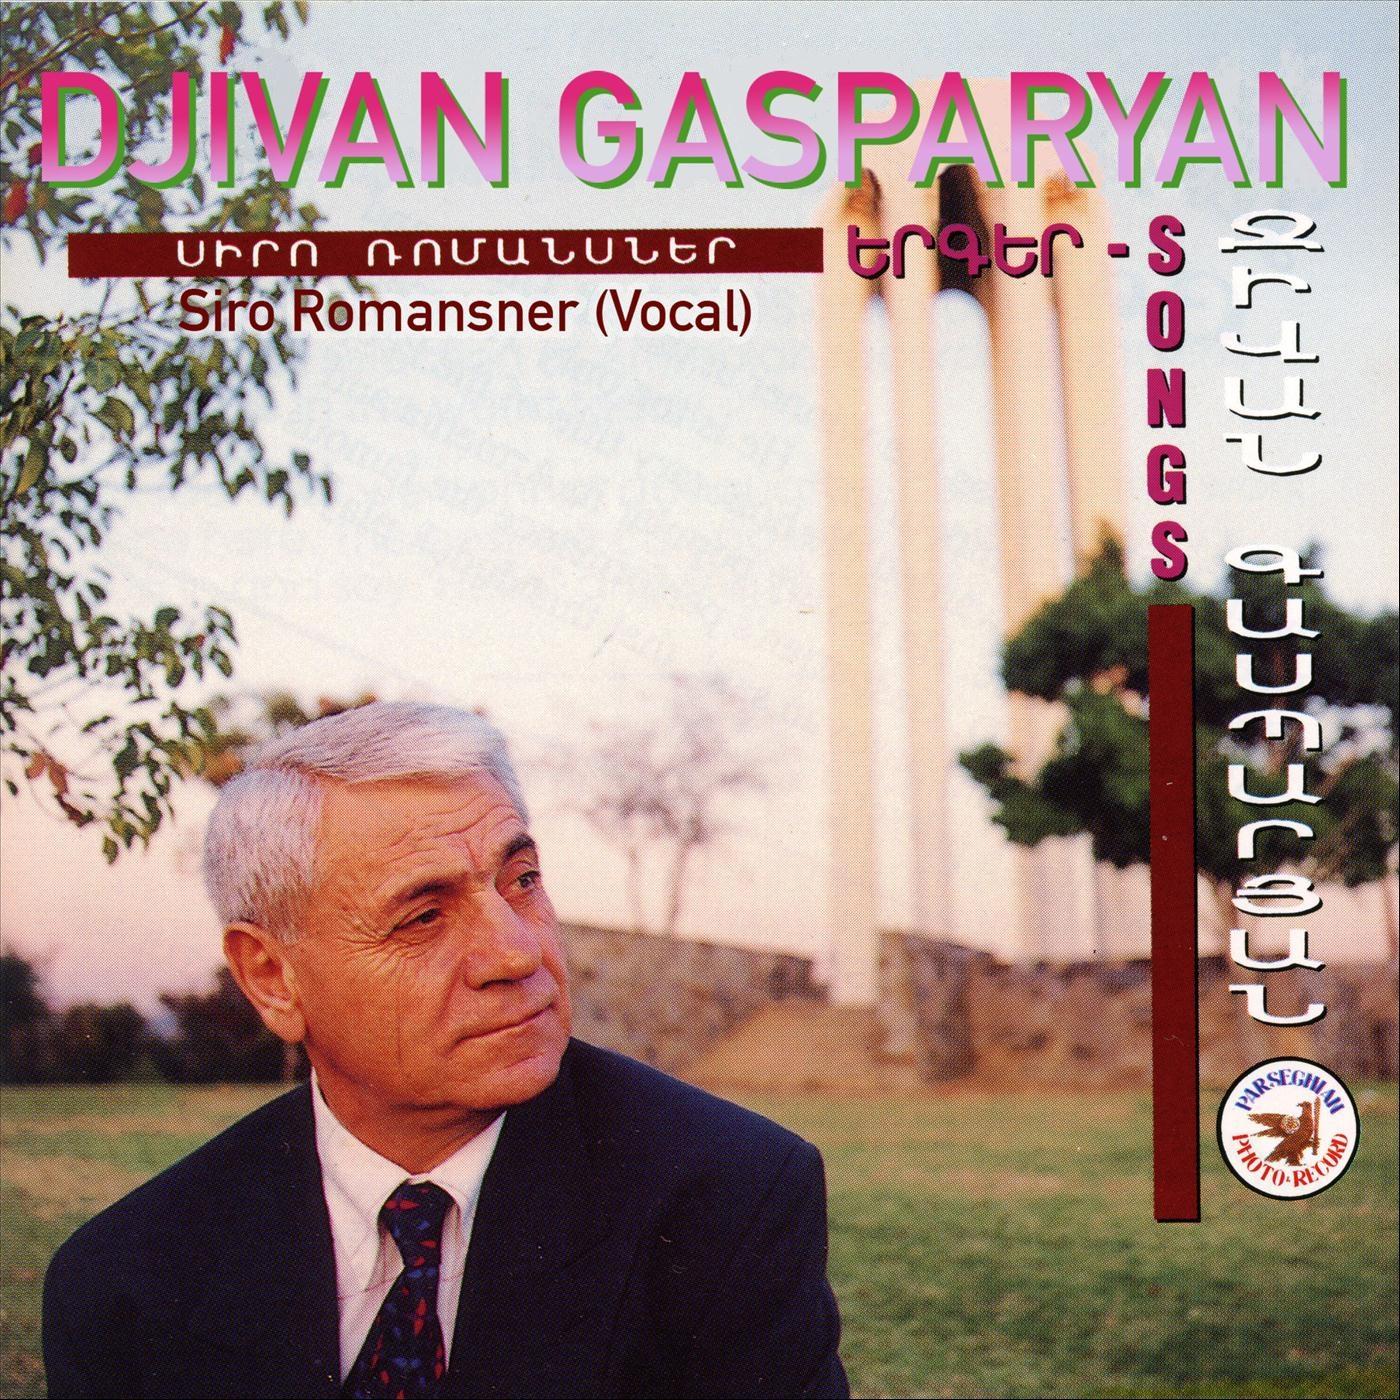 Djivan Gasparyan - Spitak Mazer